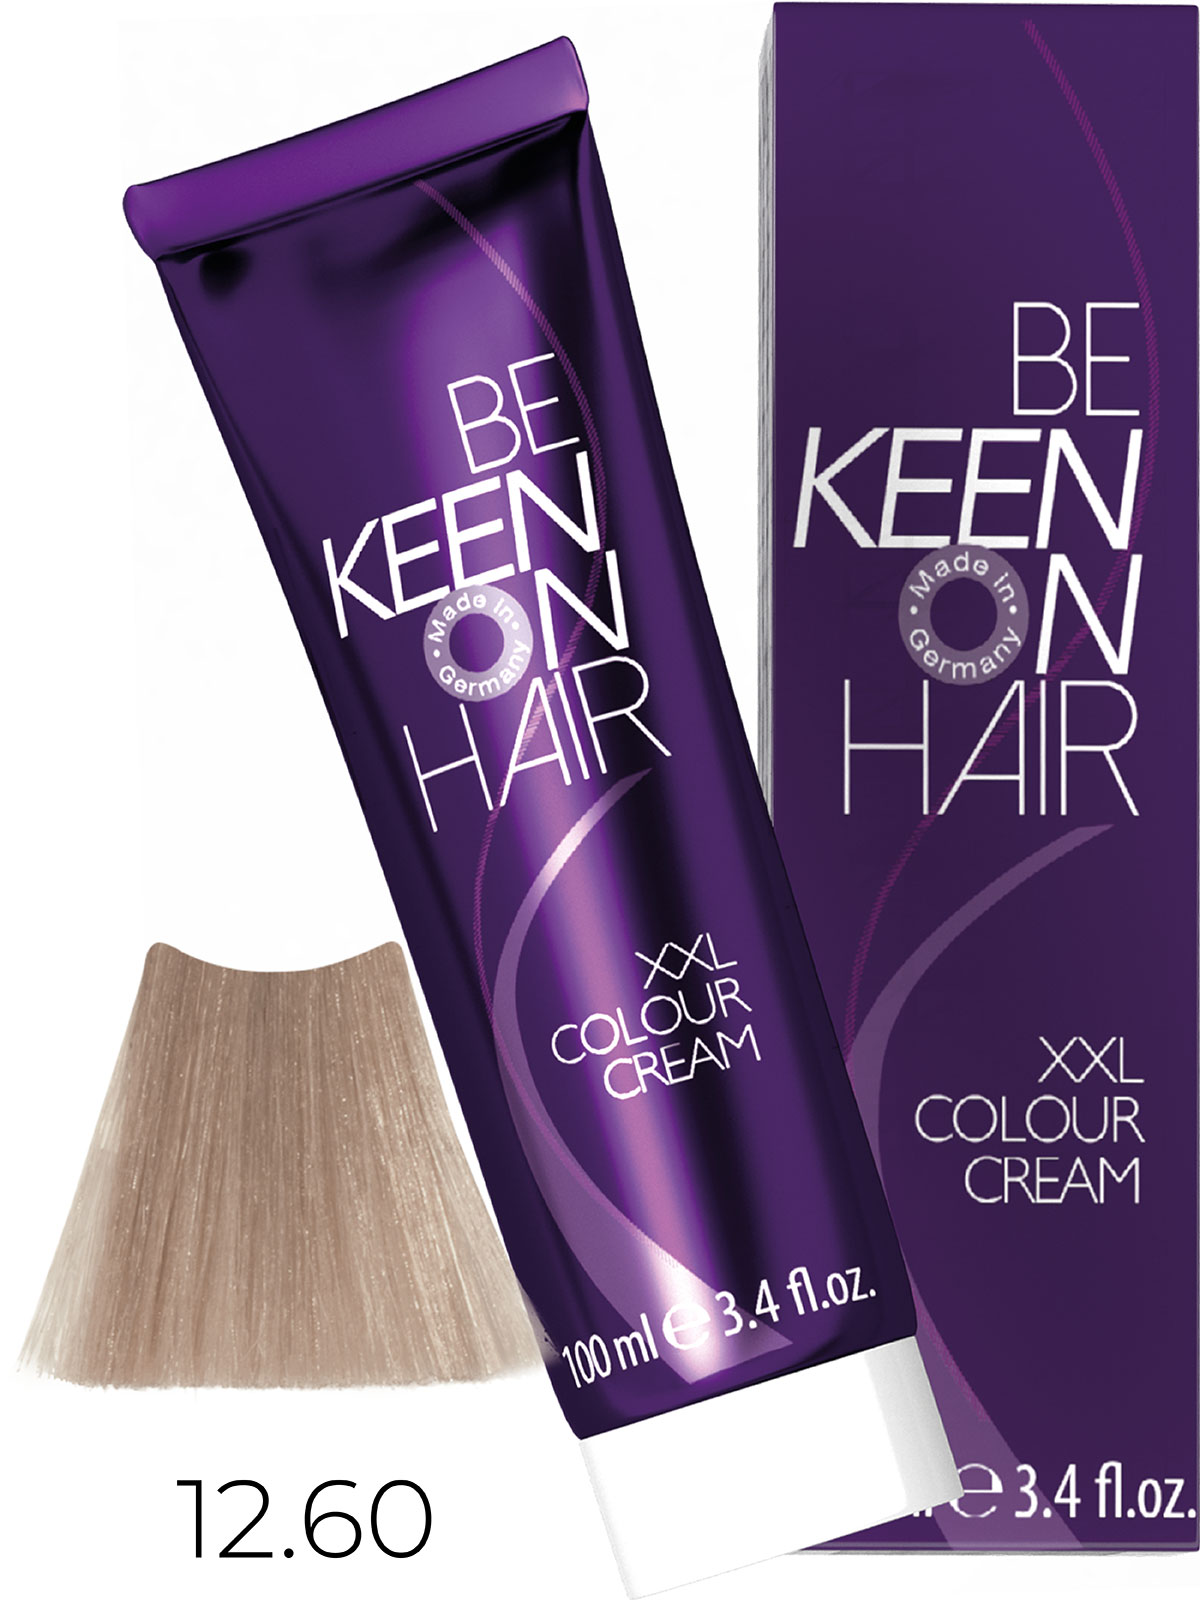 Keen крем краска colour cream xxl 12.60 платиново фиолетовый блондин 100 мл БС